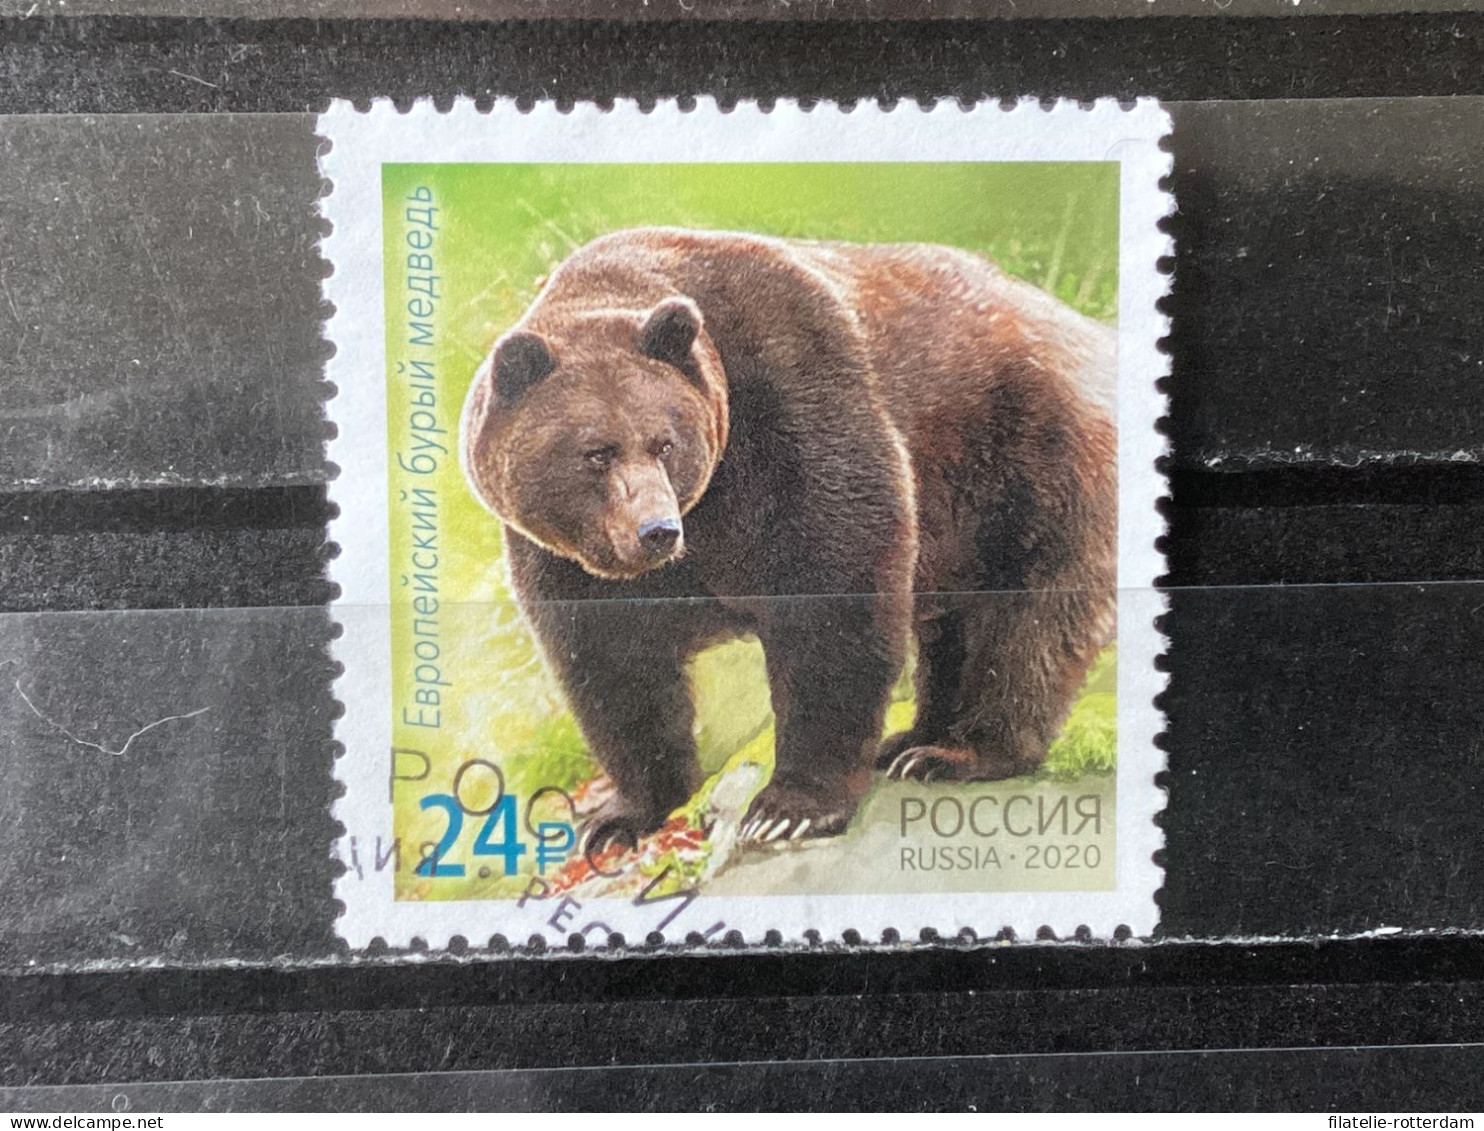 Russia / Rusland - Bears (24) 2020 - Usati